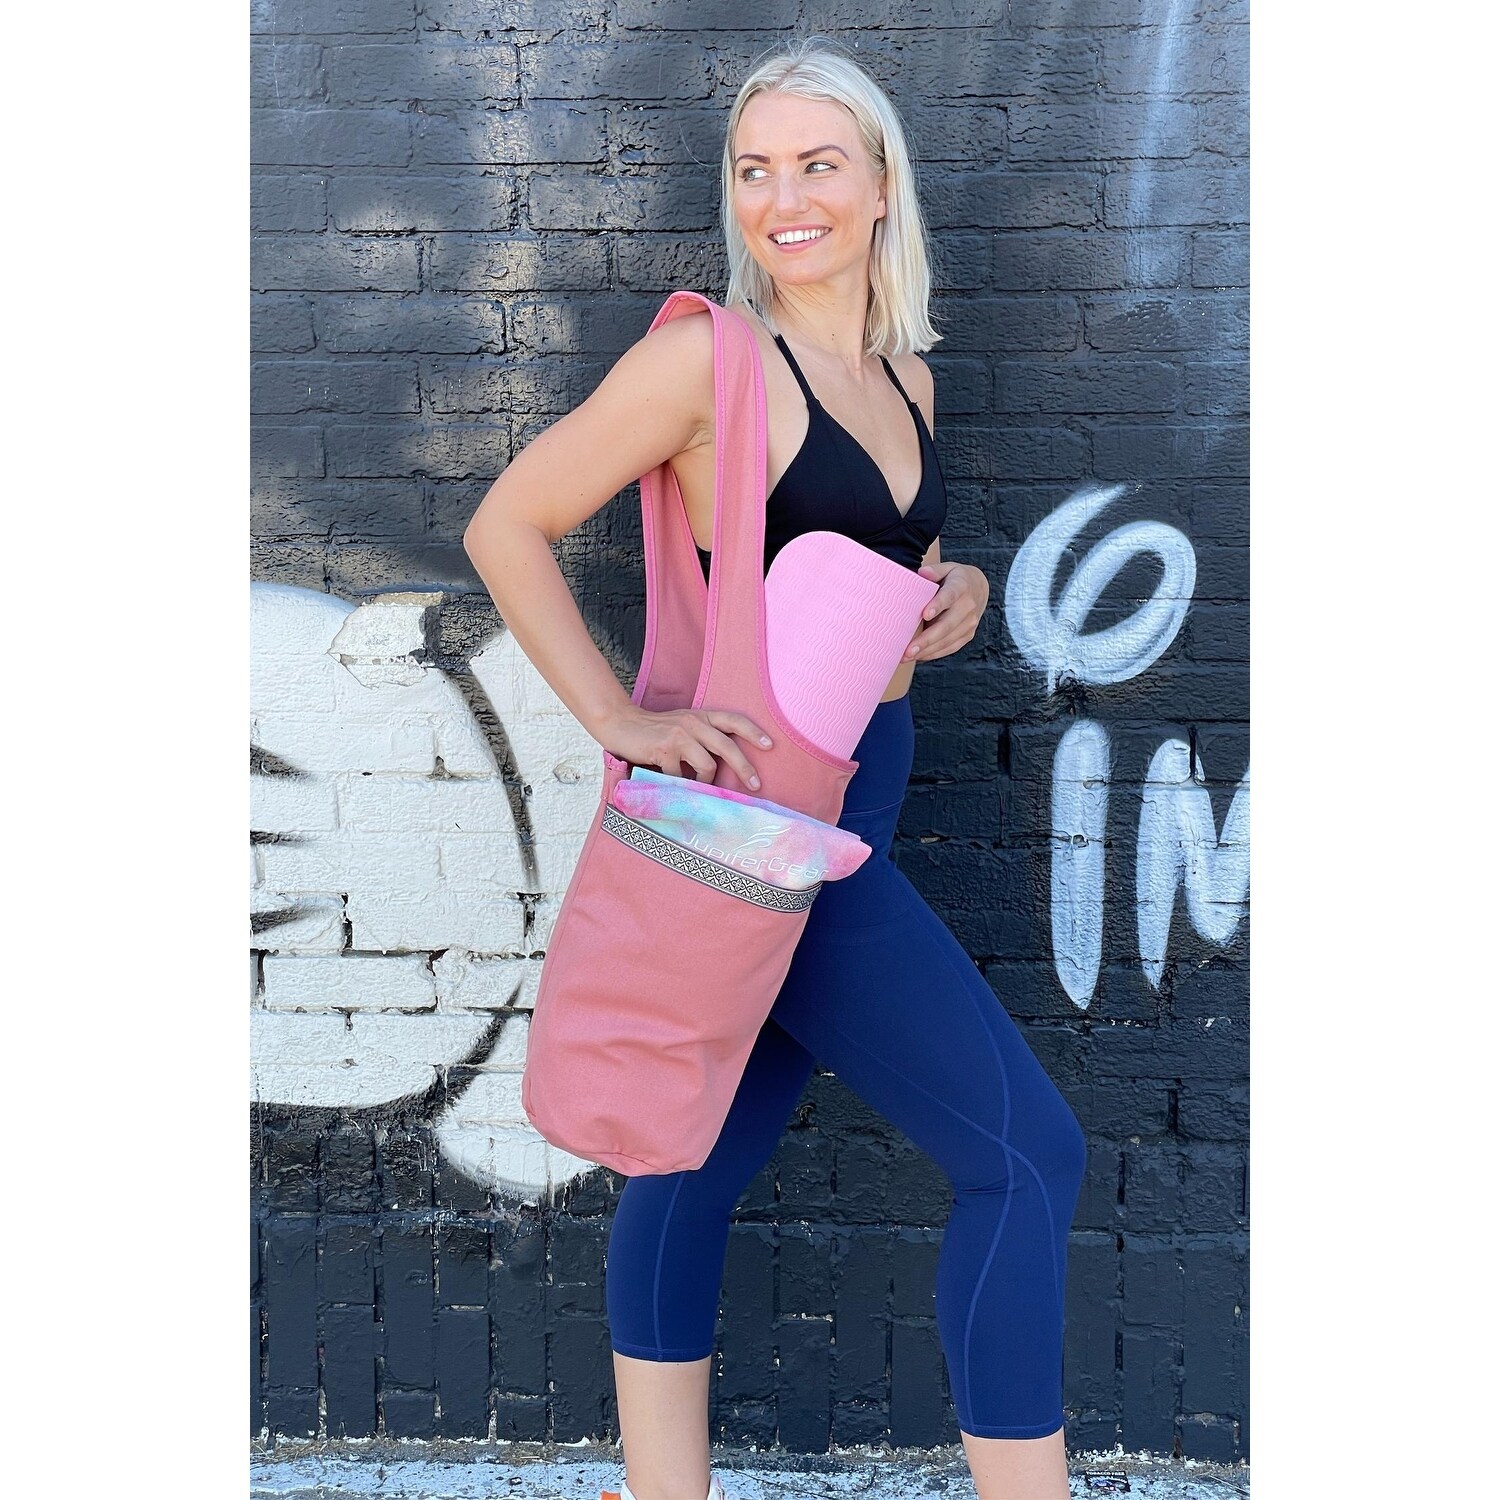  Ewedoos Yoga Mat Bag with Large Size Pocket and